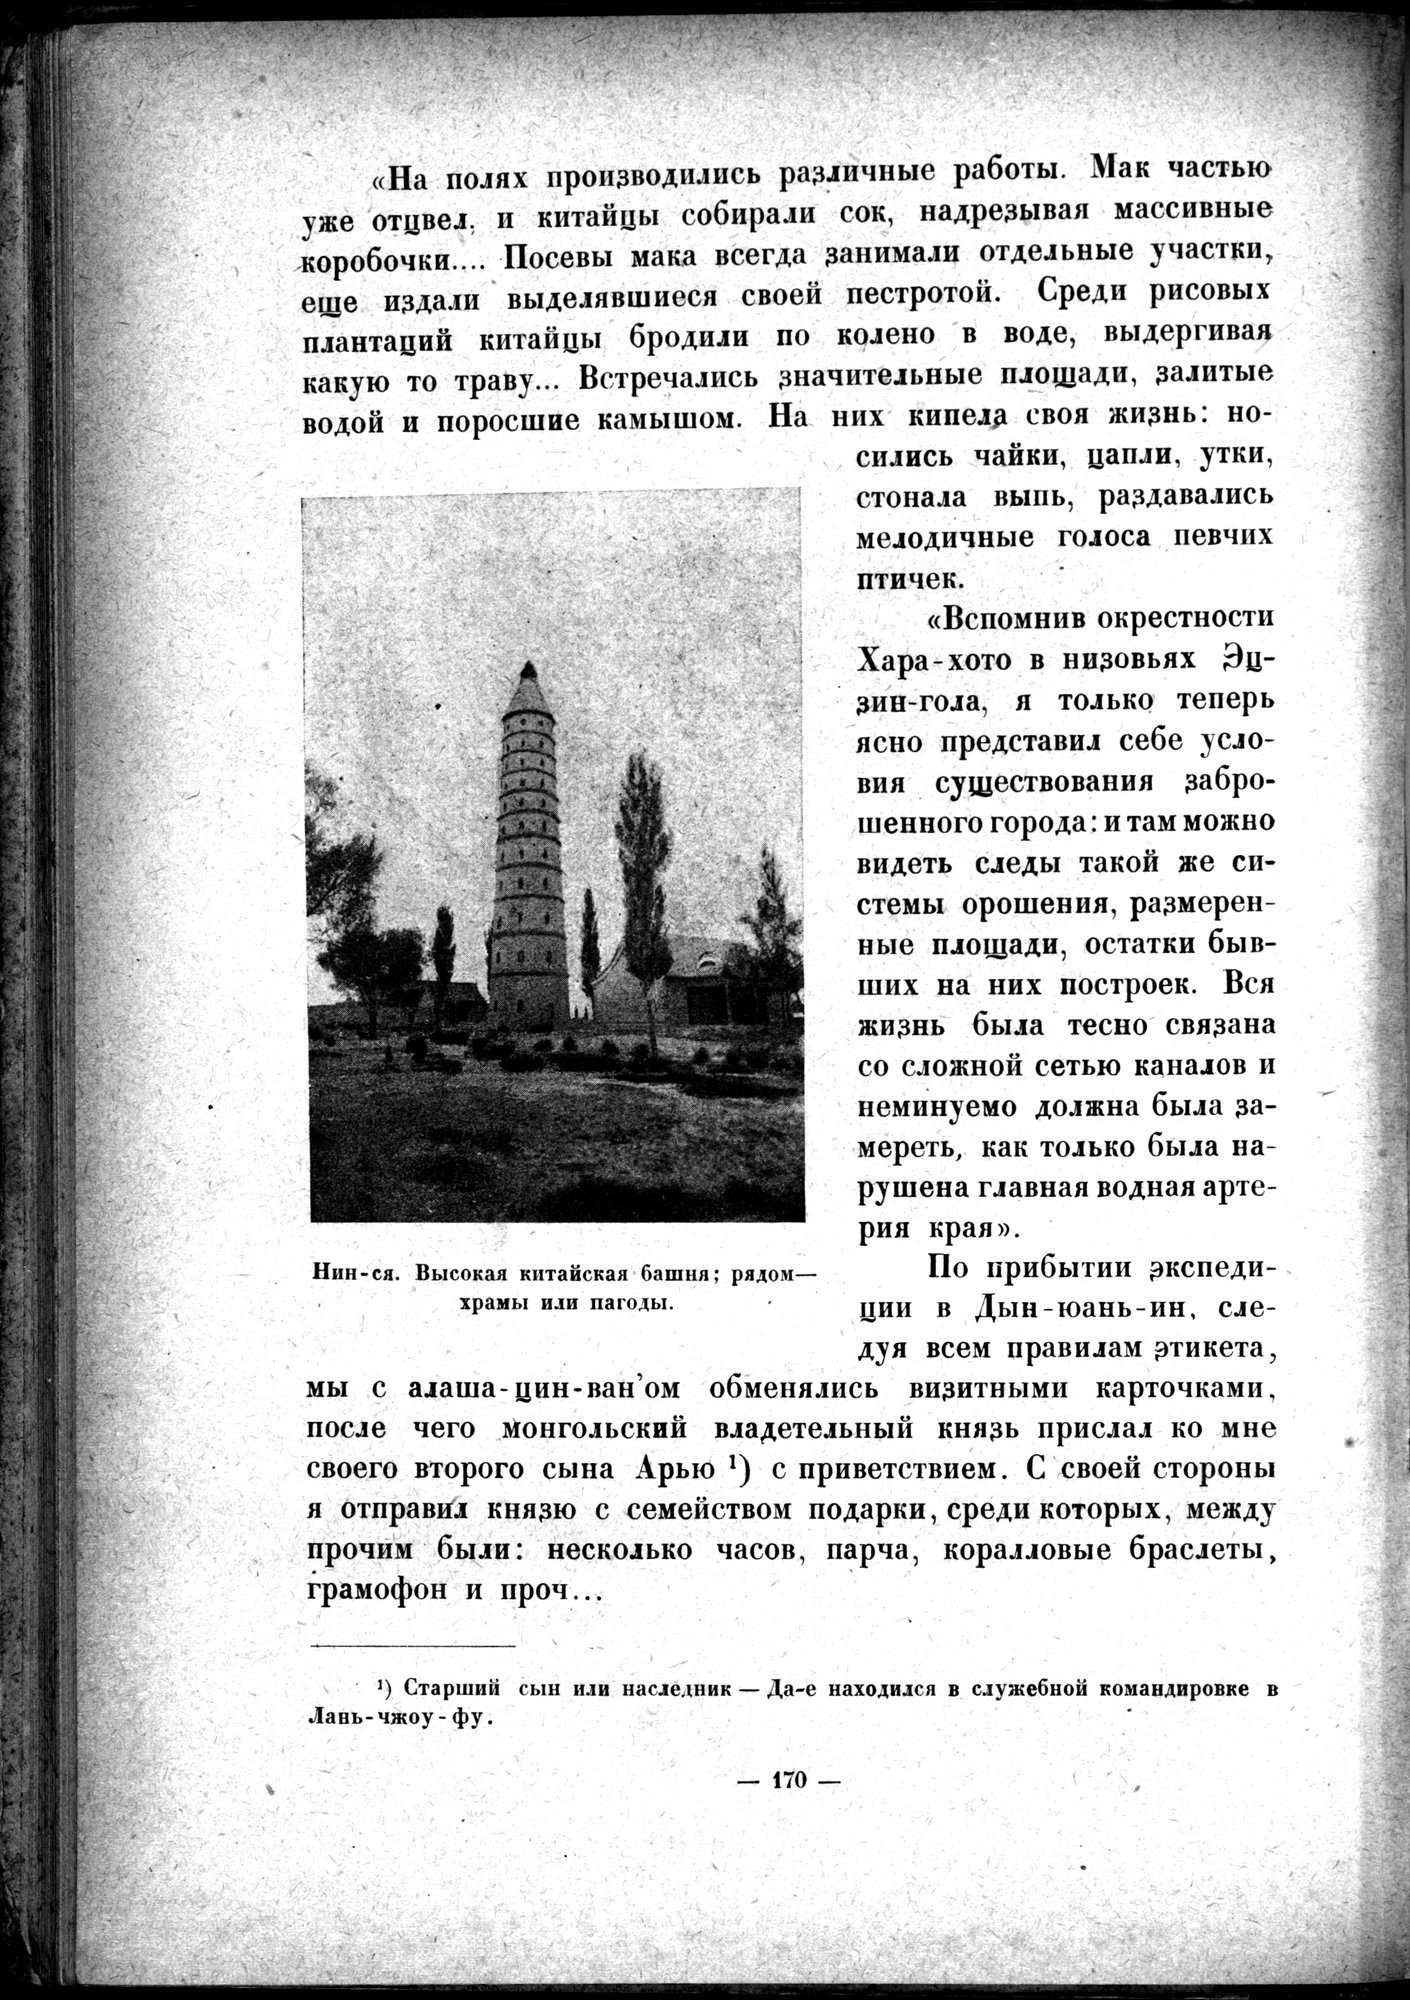 Mongoliya i Amdo i mertby gorod Khara-Khoto : vol.1 / Page 202 (Grayscale High Resolution Image)